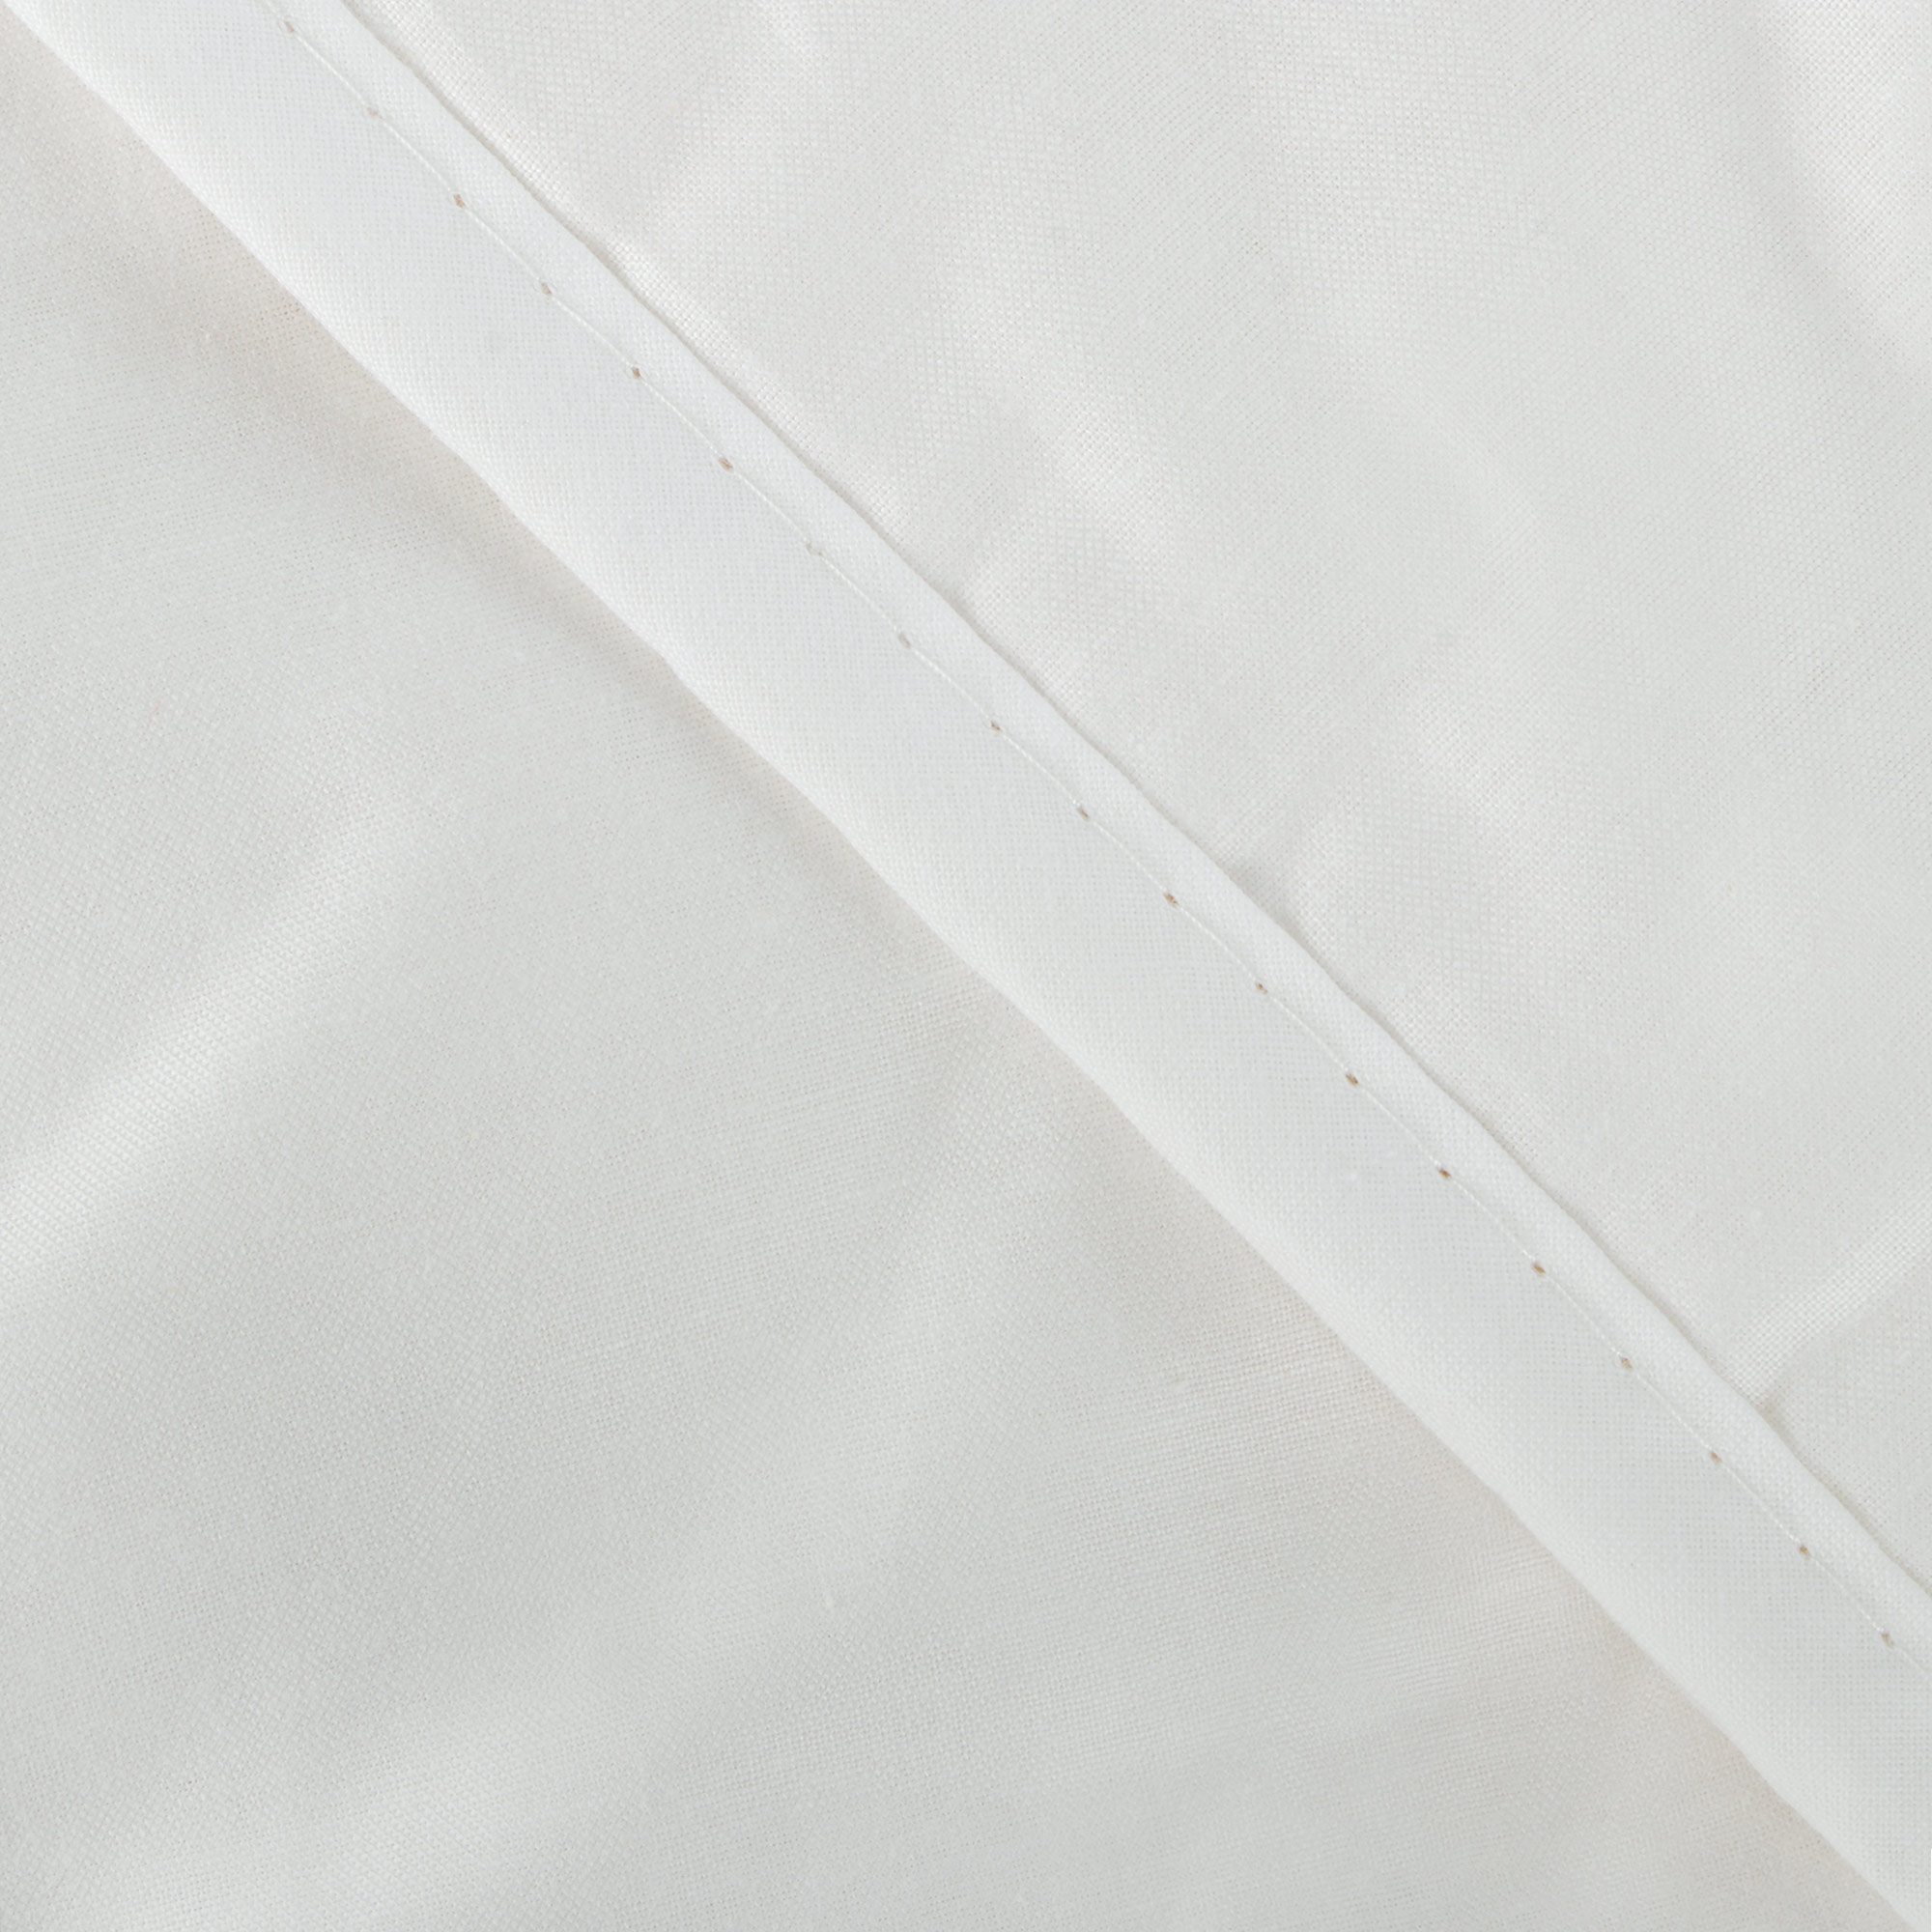 Одеяло Trendline wasch-seide легкое 200x220 см - фото 2